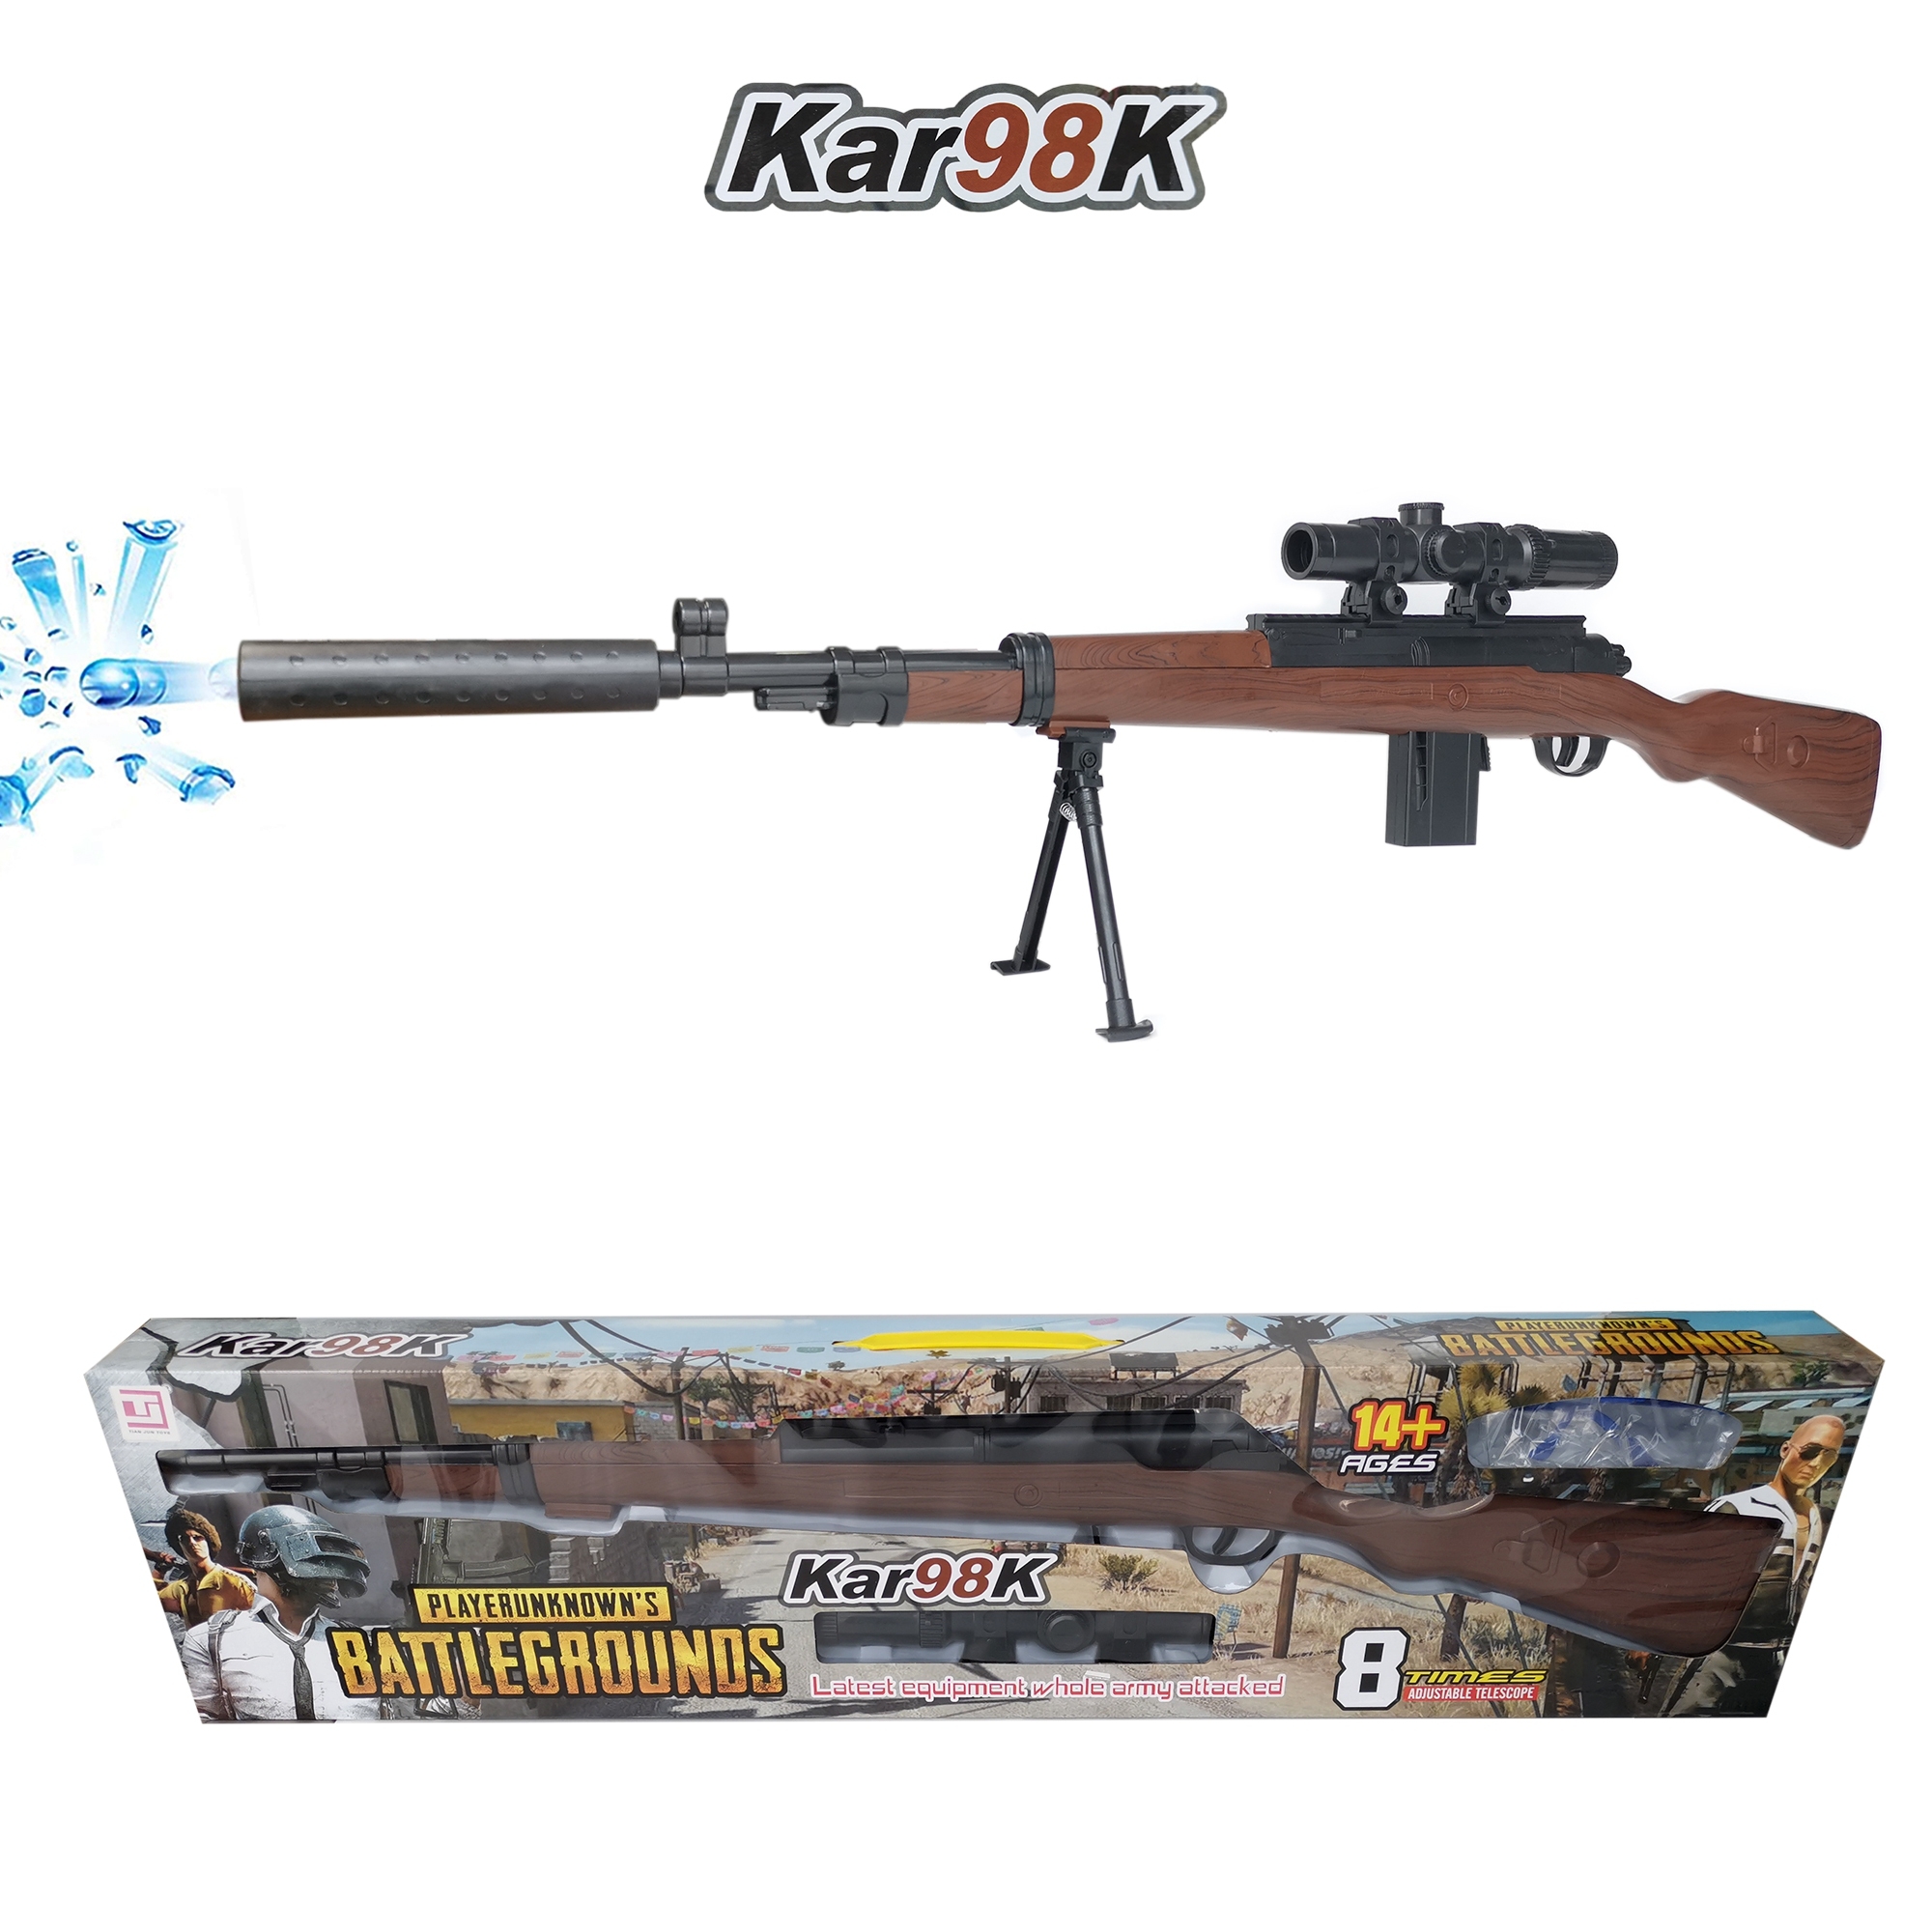 KhoaOat Shop ปืนของเล่น ปืนอัดลม ปืนอัดลมยิงกระสุนเจล Kar98K ระบบสปริงชักยิงทีละนัด